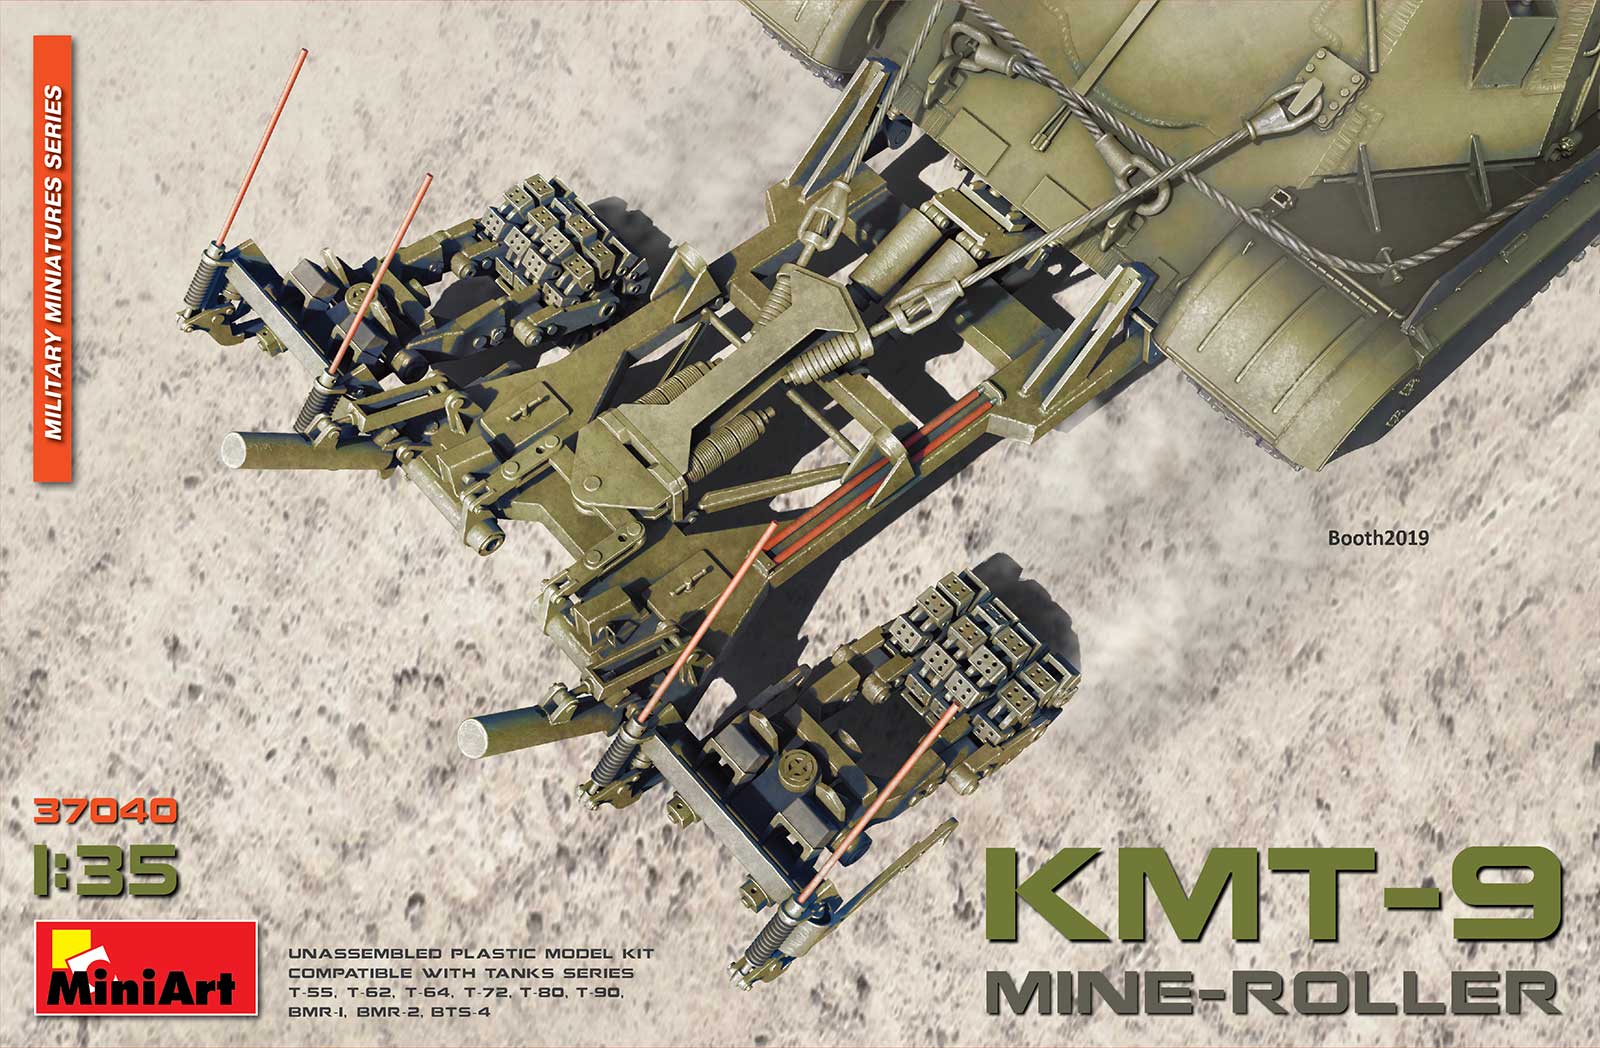 37040  дополнения из пластика  KMT-9 Mine Roller  (1:35)